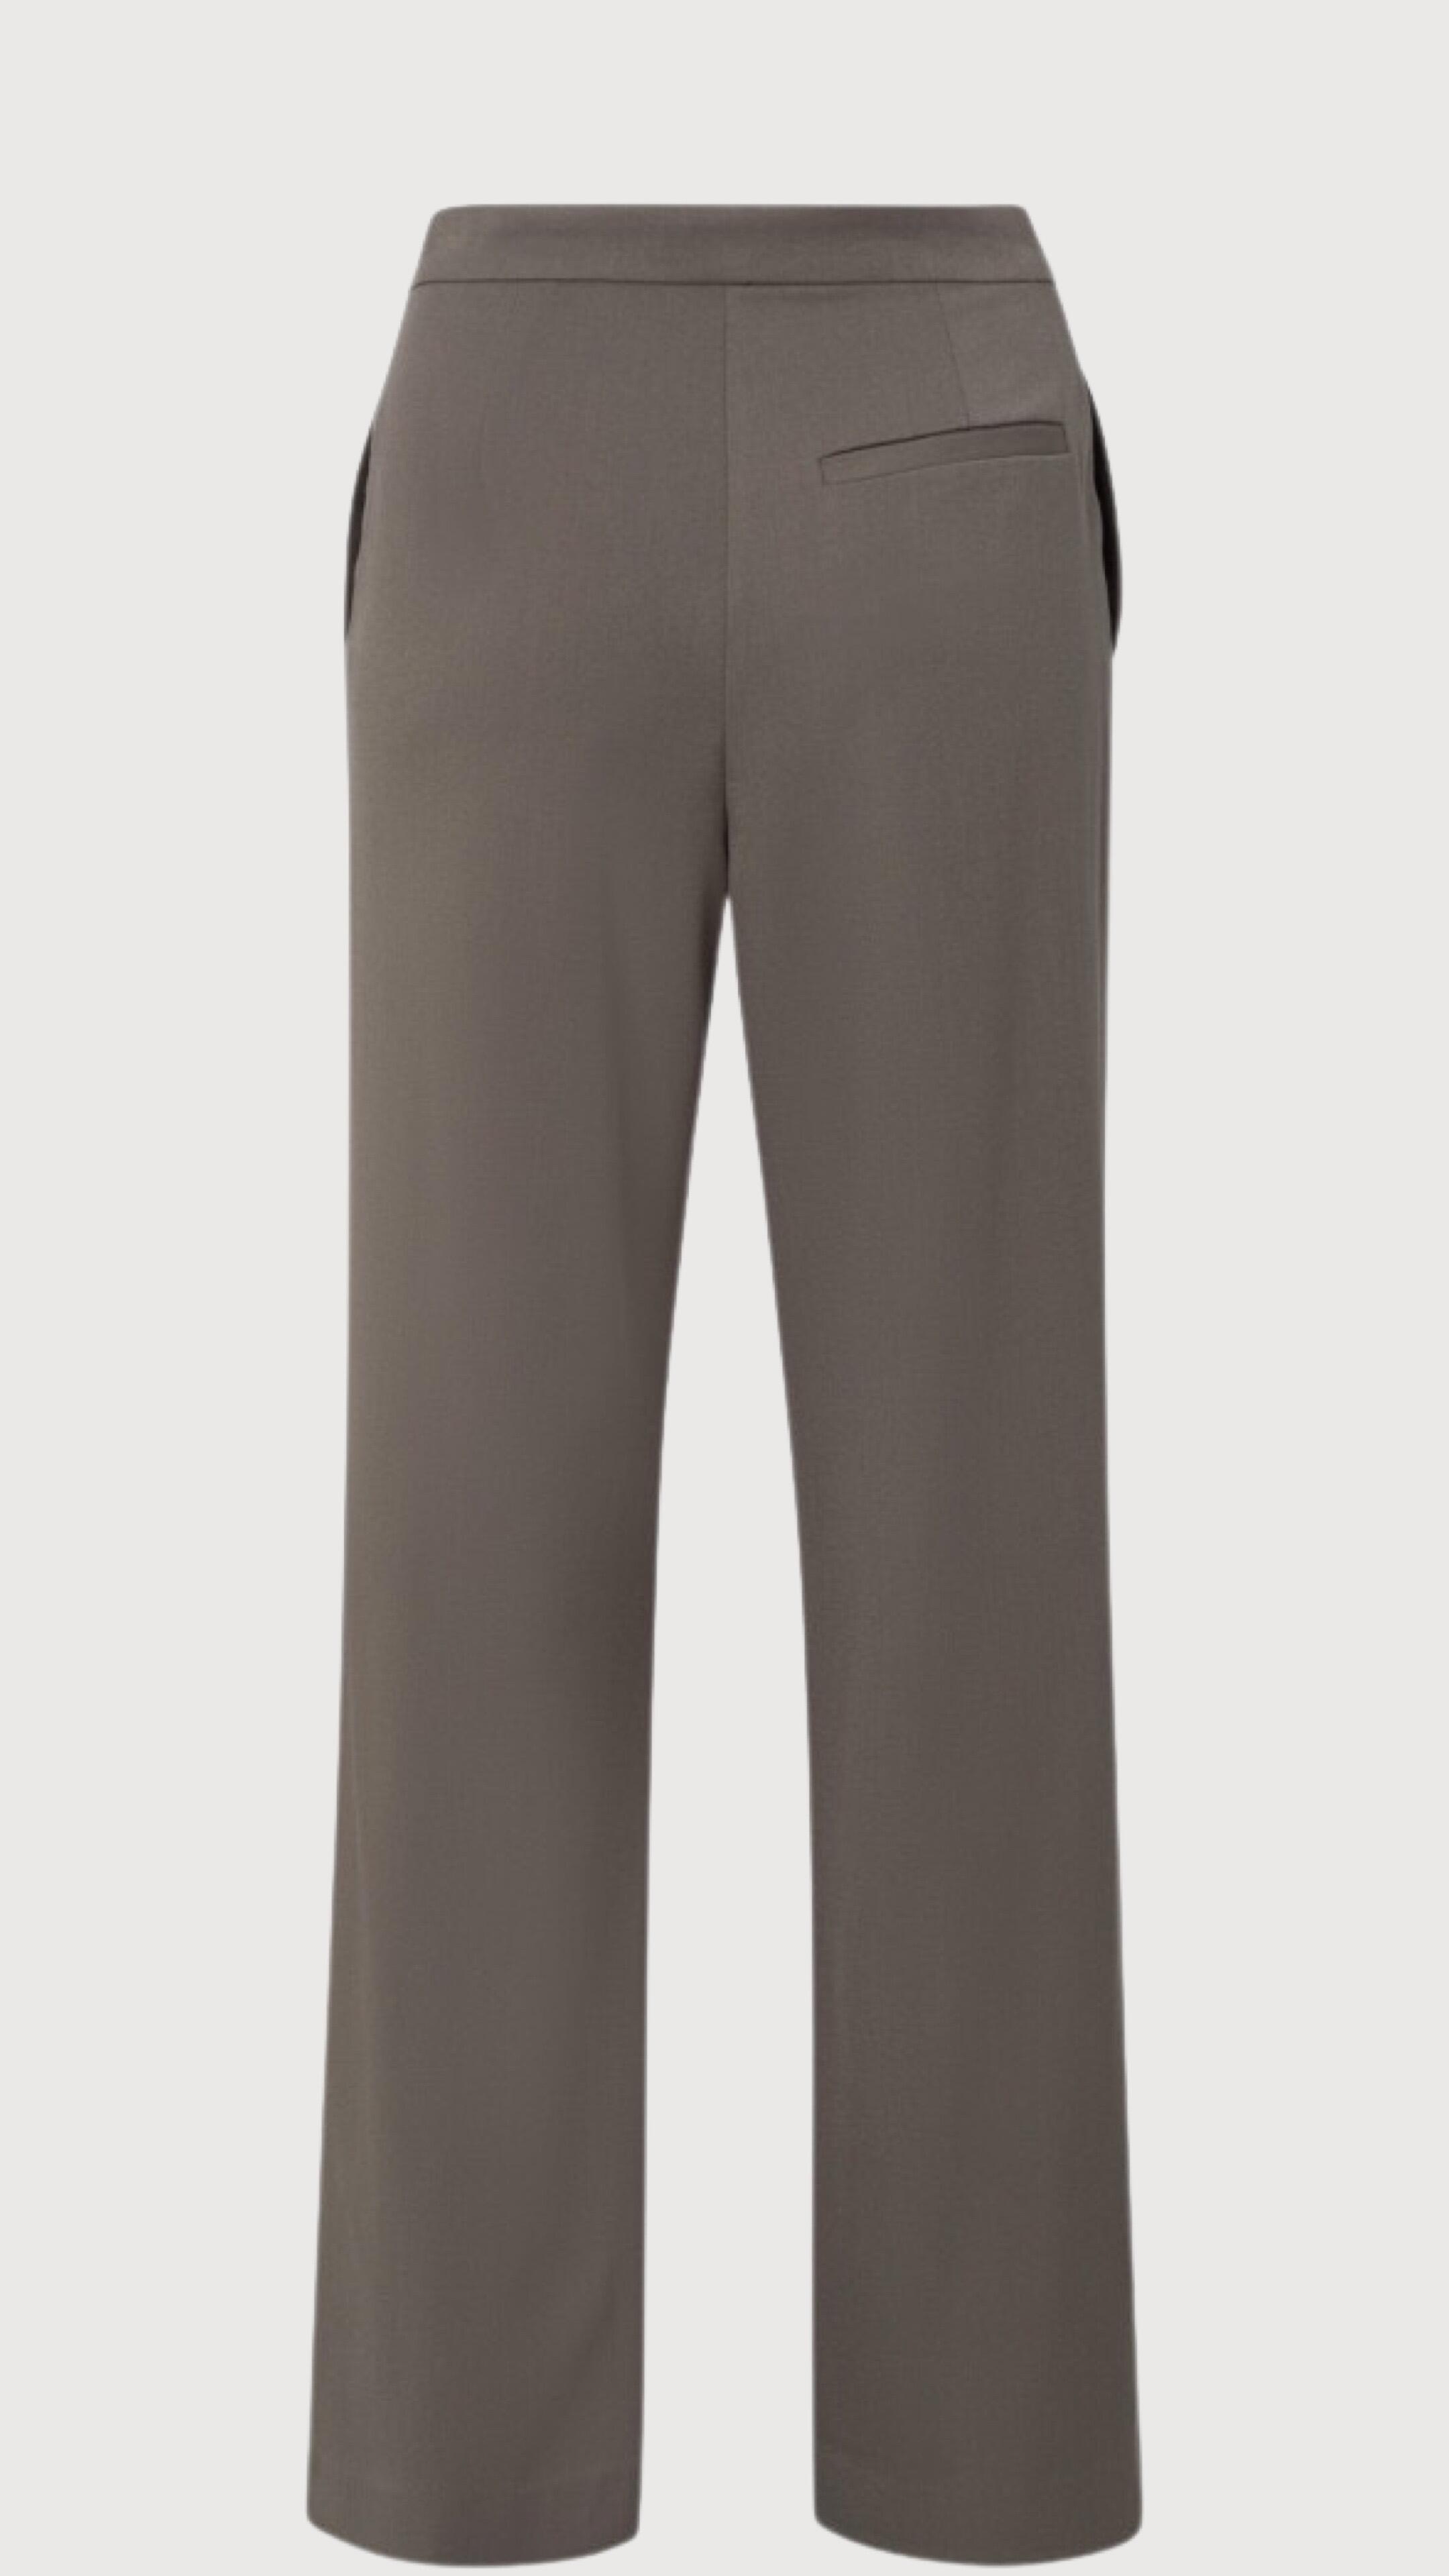 High waist pantalon with wide leg, zip and side pockets